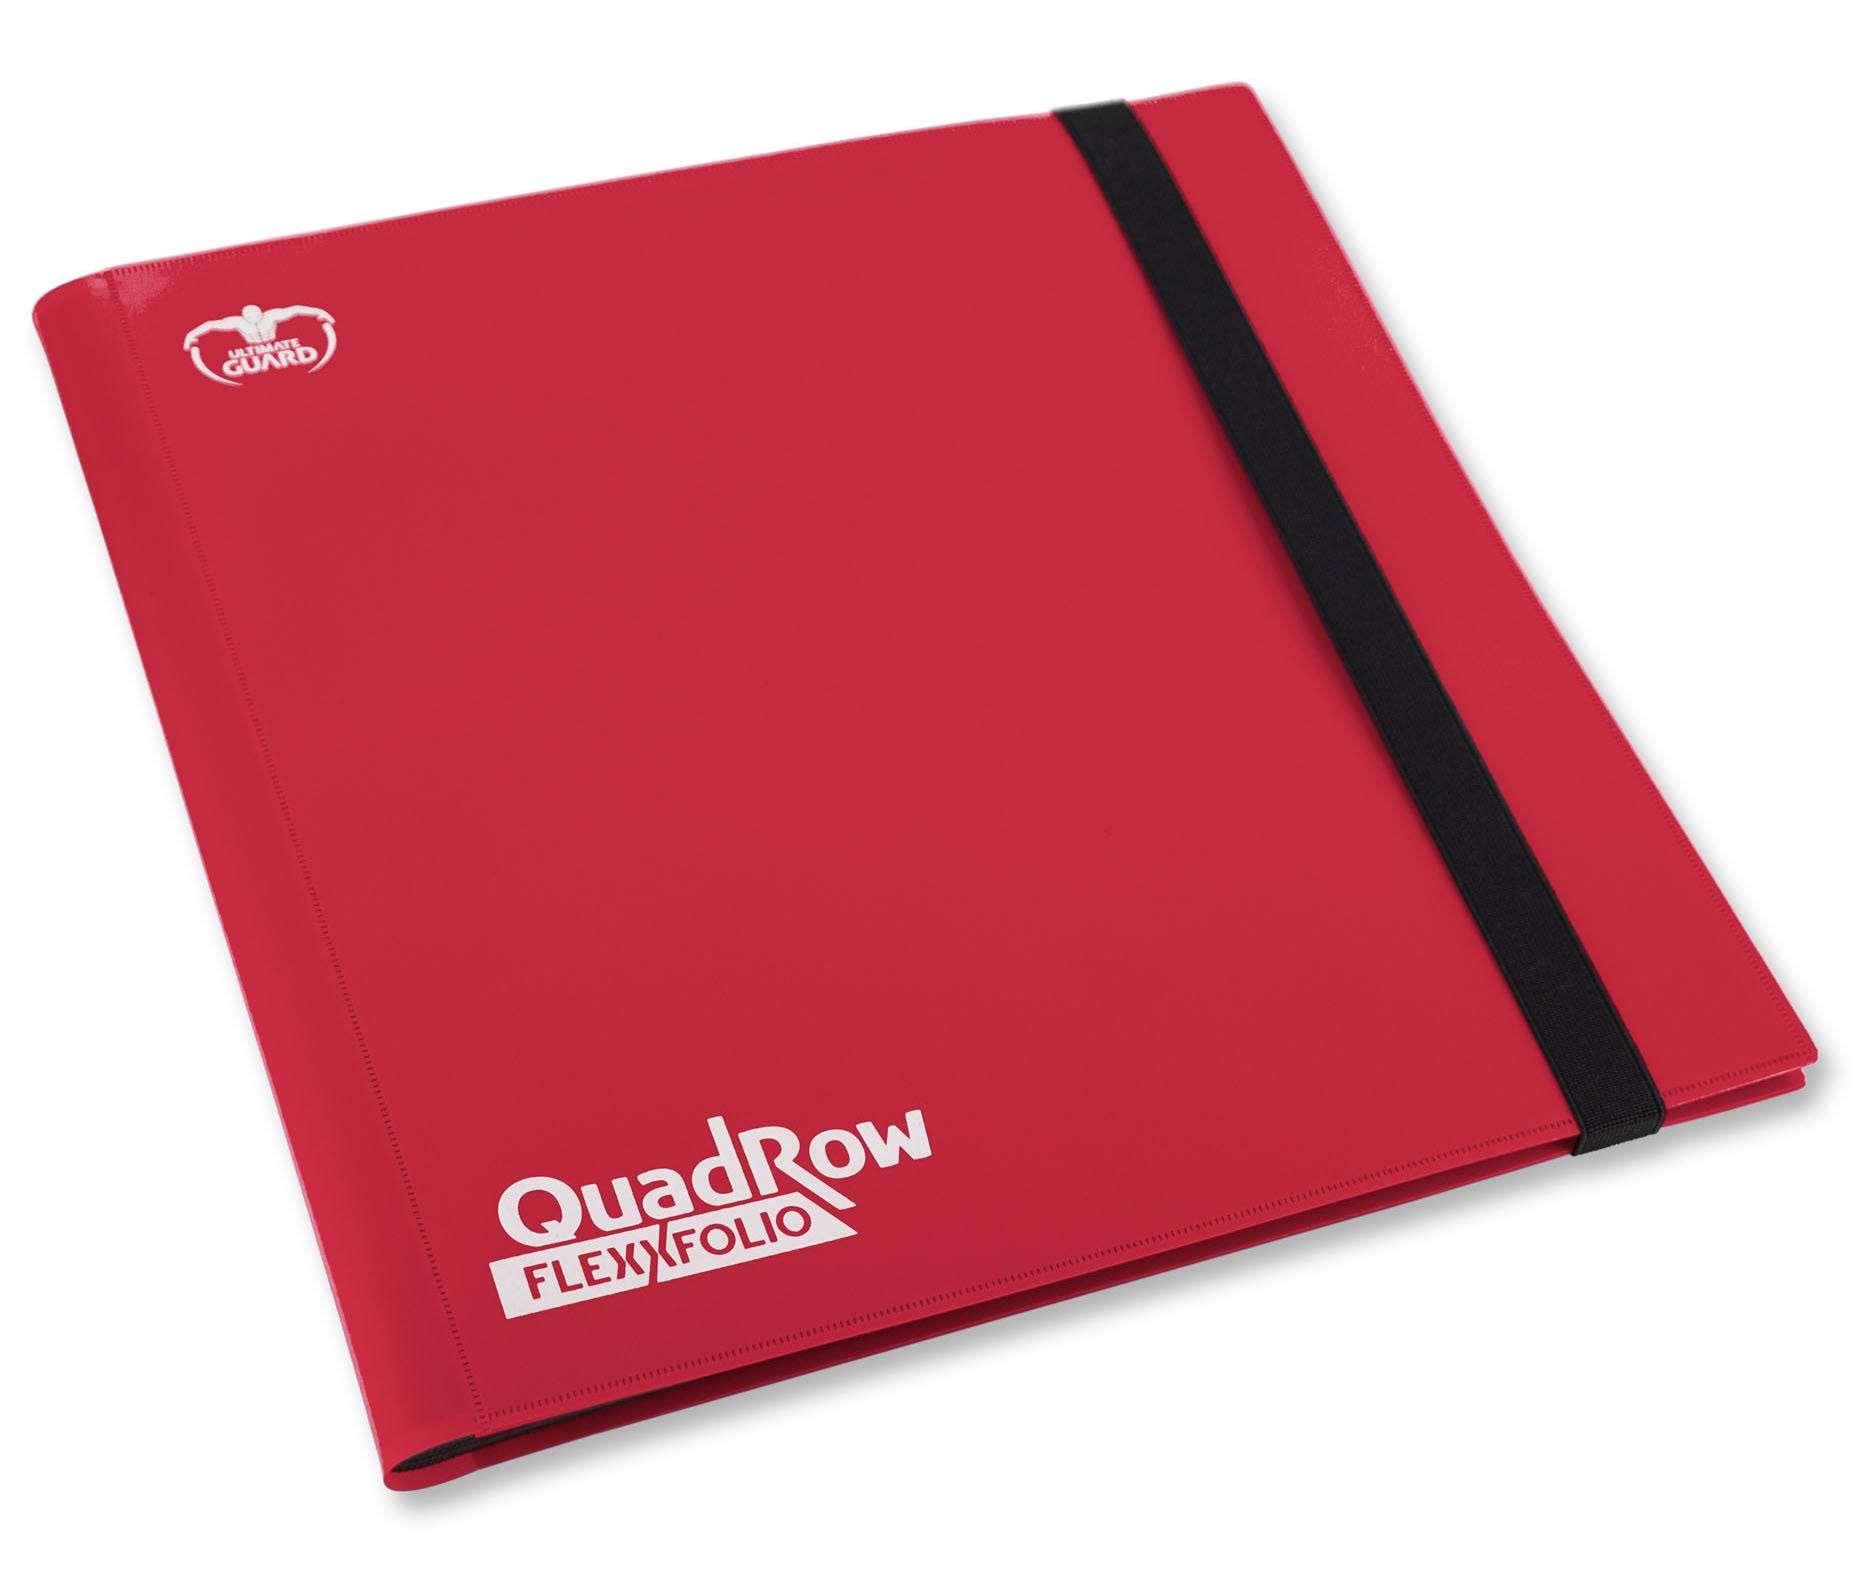 Ultimate Guard QuadRow FlexXfolio - Red, 12 Pocket